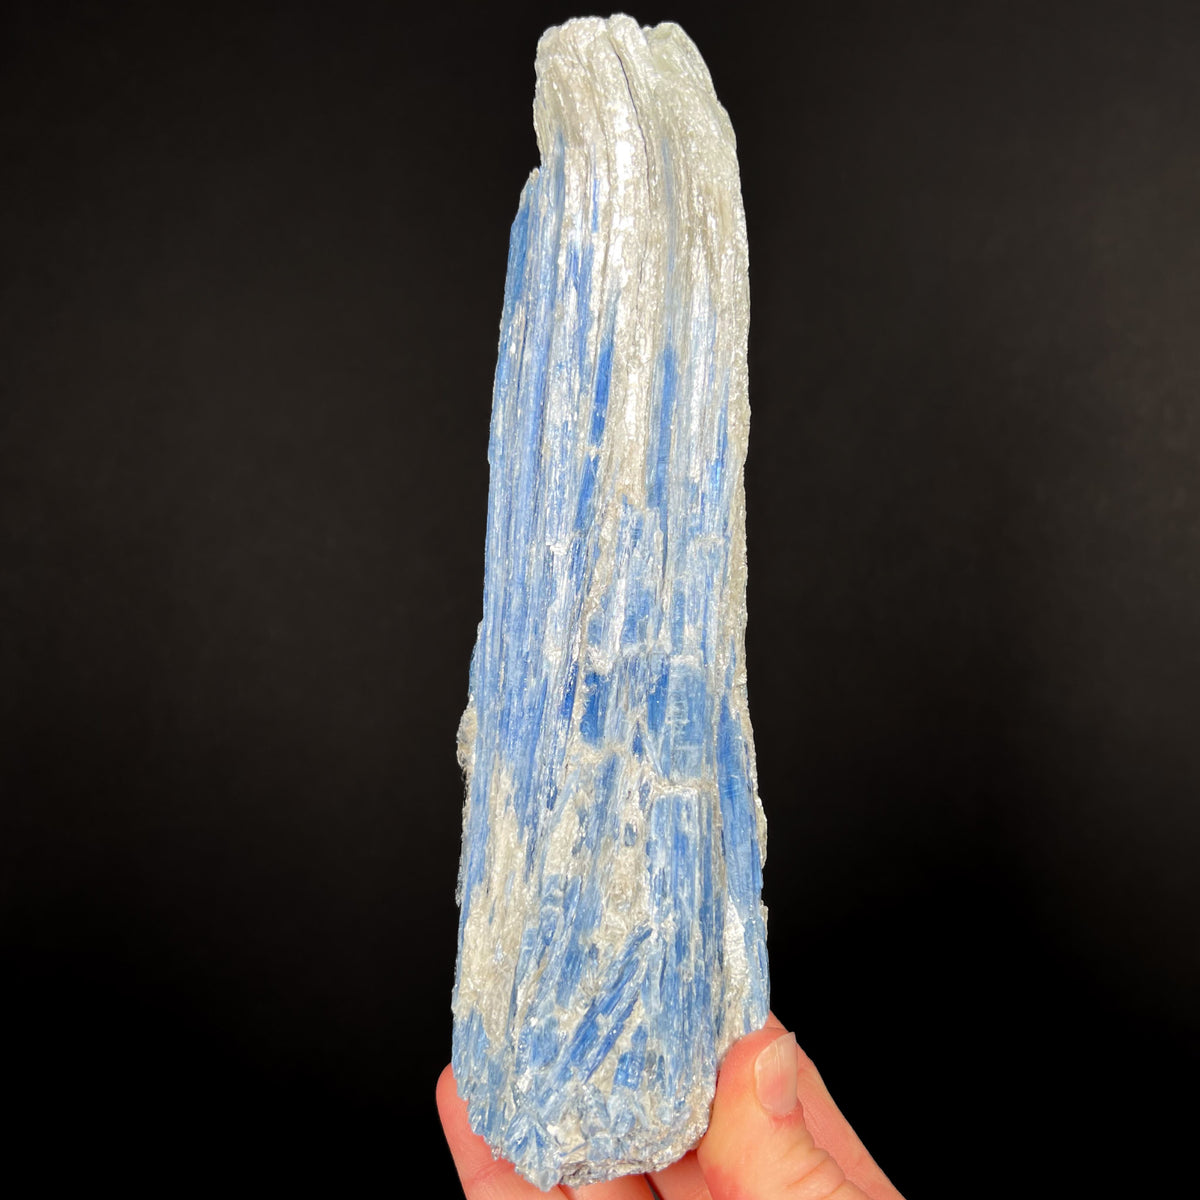 Large Blue Kyanite Crystal Cluster